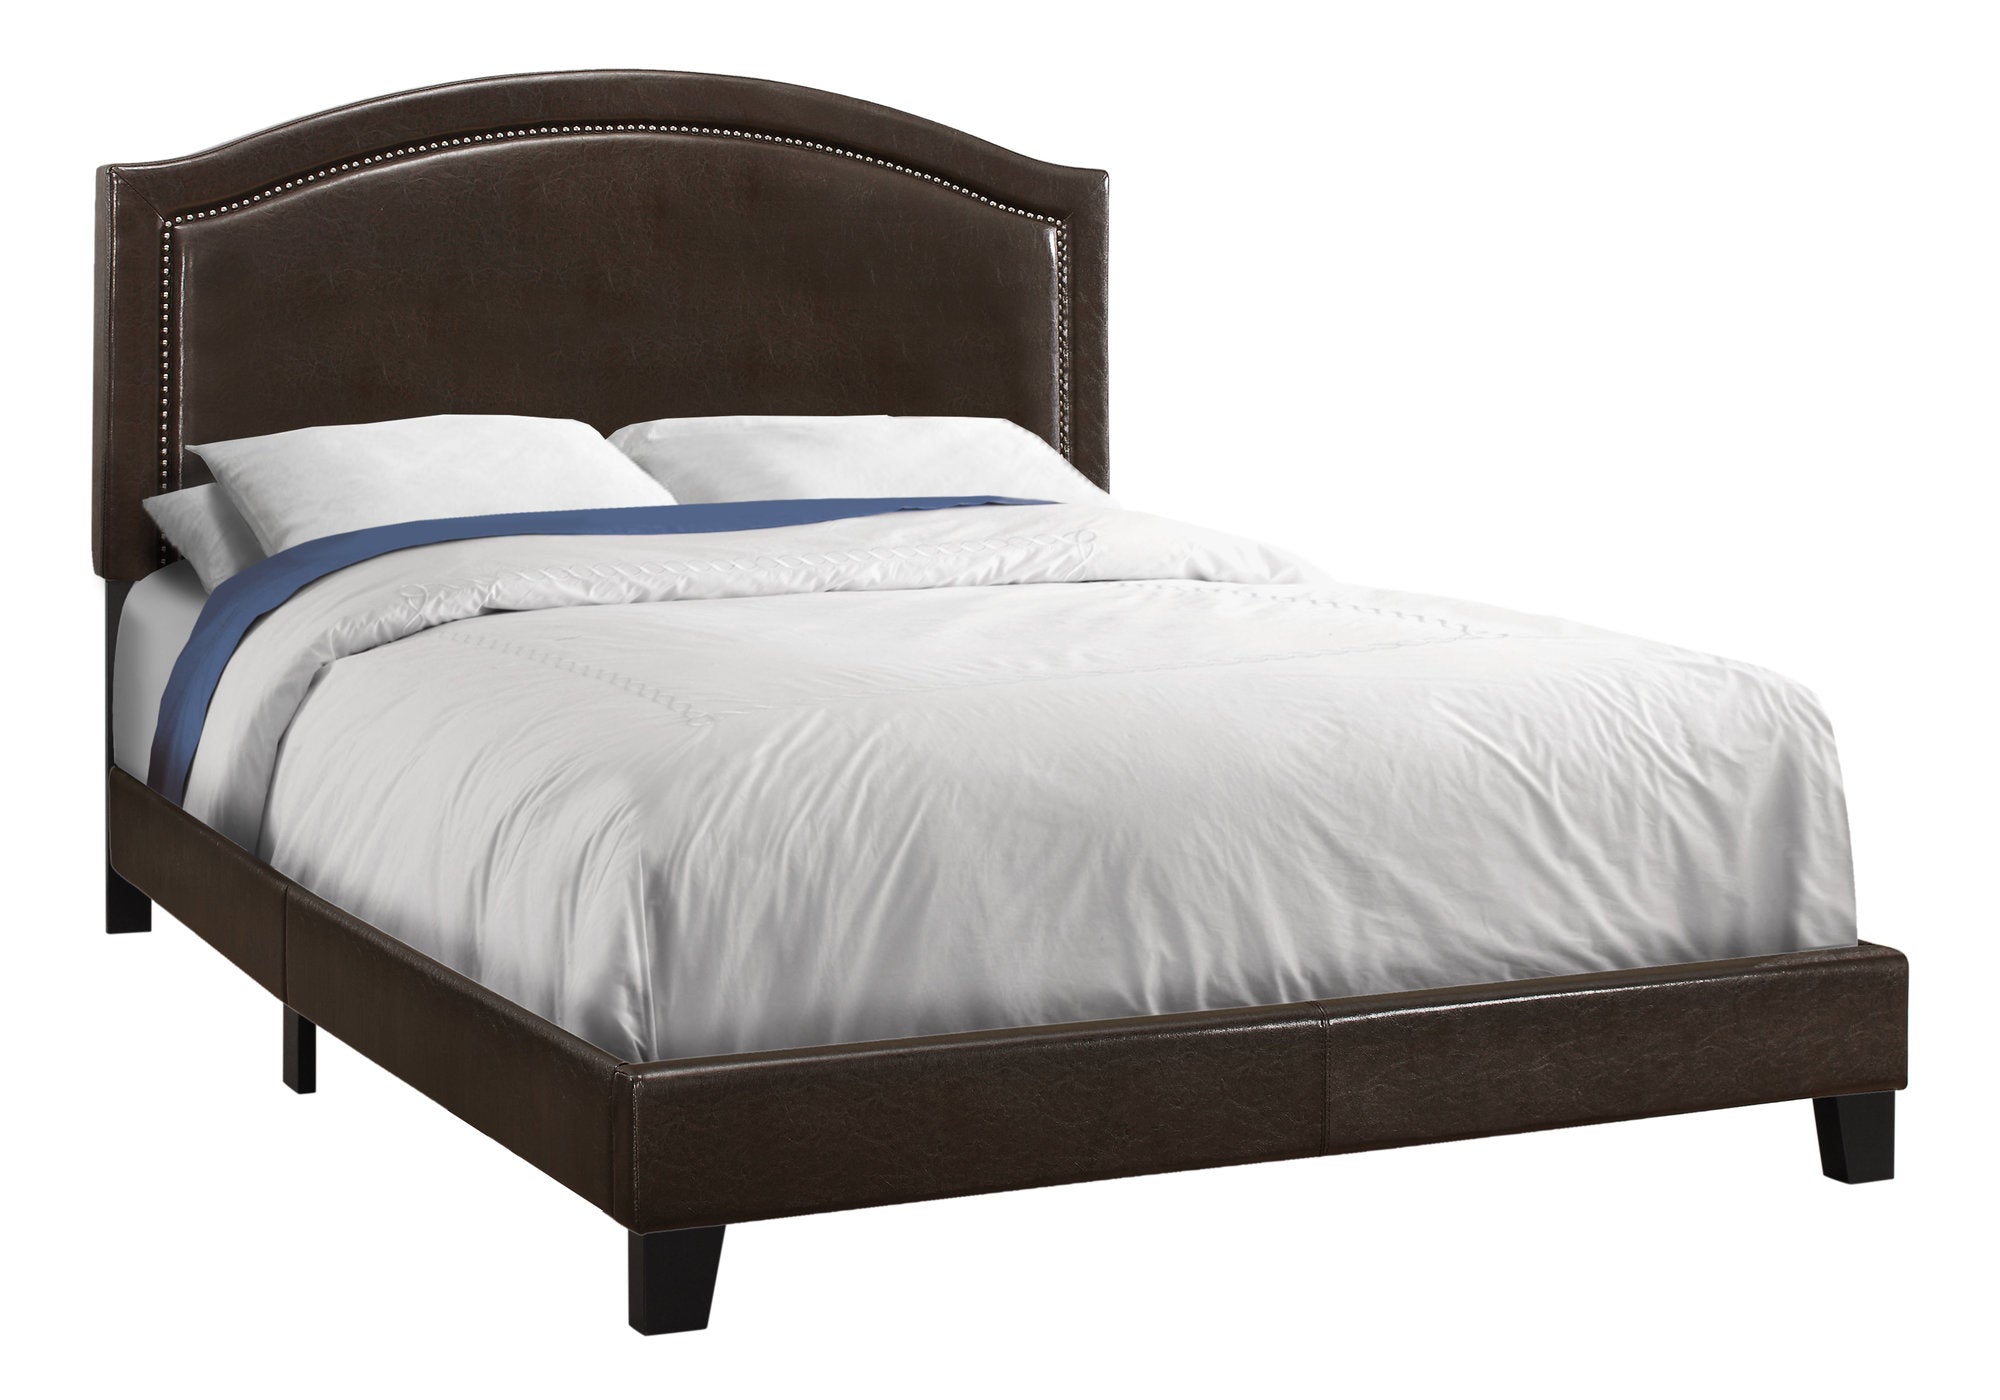 MN-145938Q    Bed, Frame, Platform, Bedroom, Queen Size, Upholstered, Linen Look Fabric, Wood Legs, Dark Brown, Black, Transitional